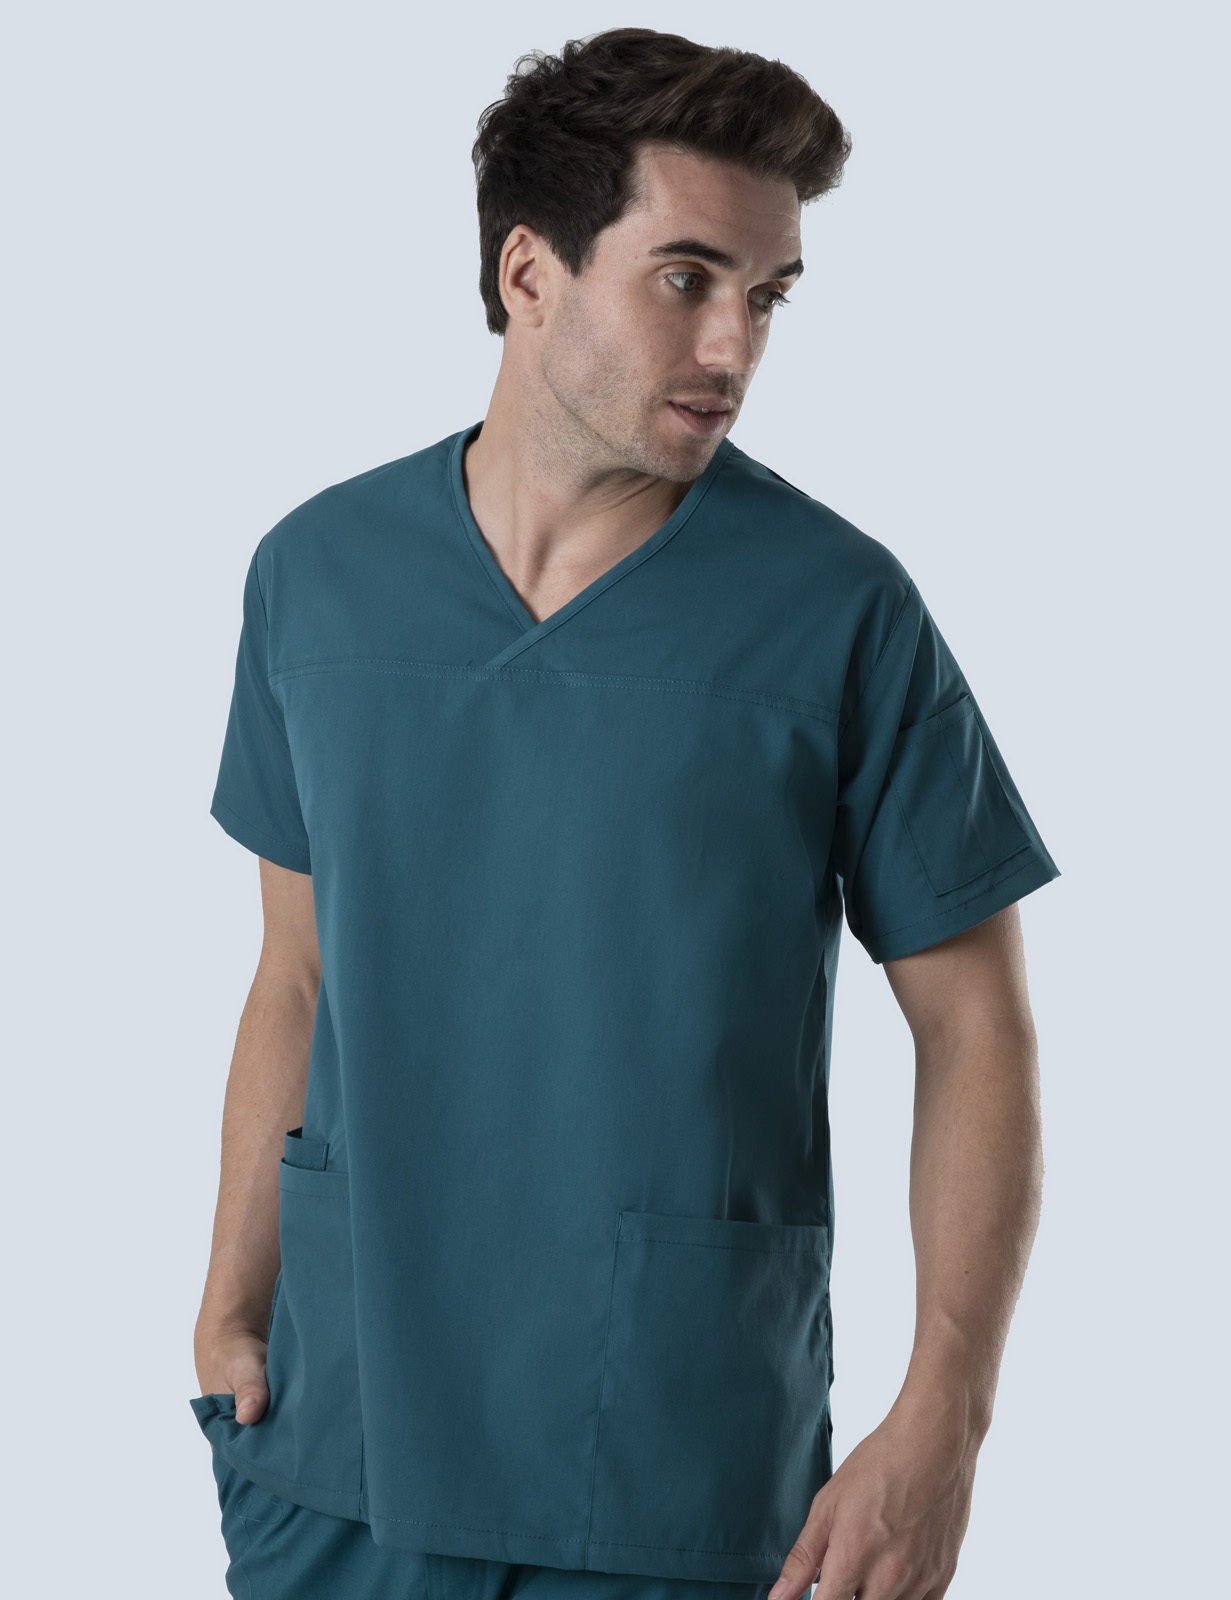 UQ Vets Gatton Surgery Uniform Top Only Bundle (Men's Fit Solid Top in Caribbean incl Logos)